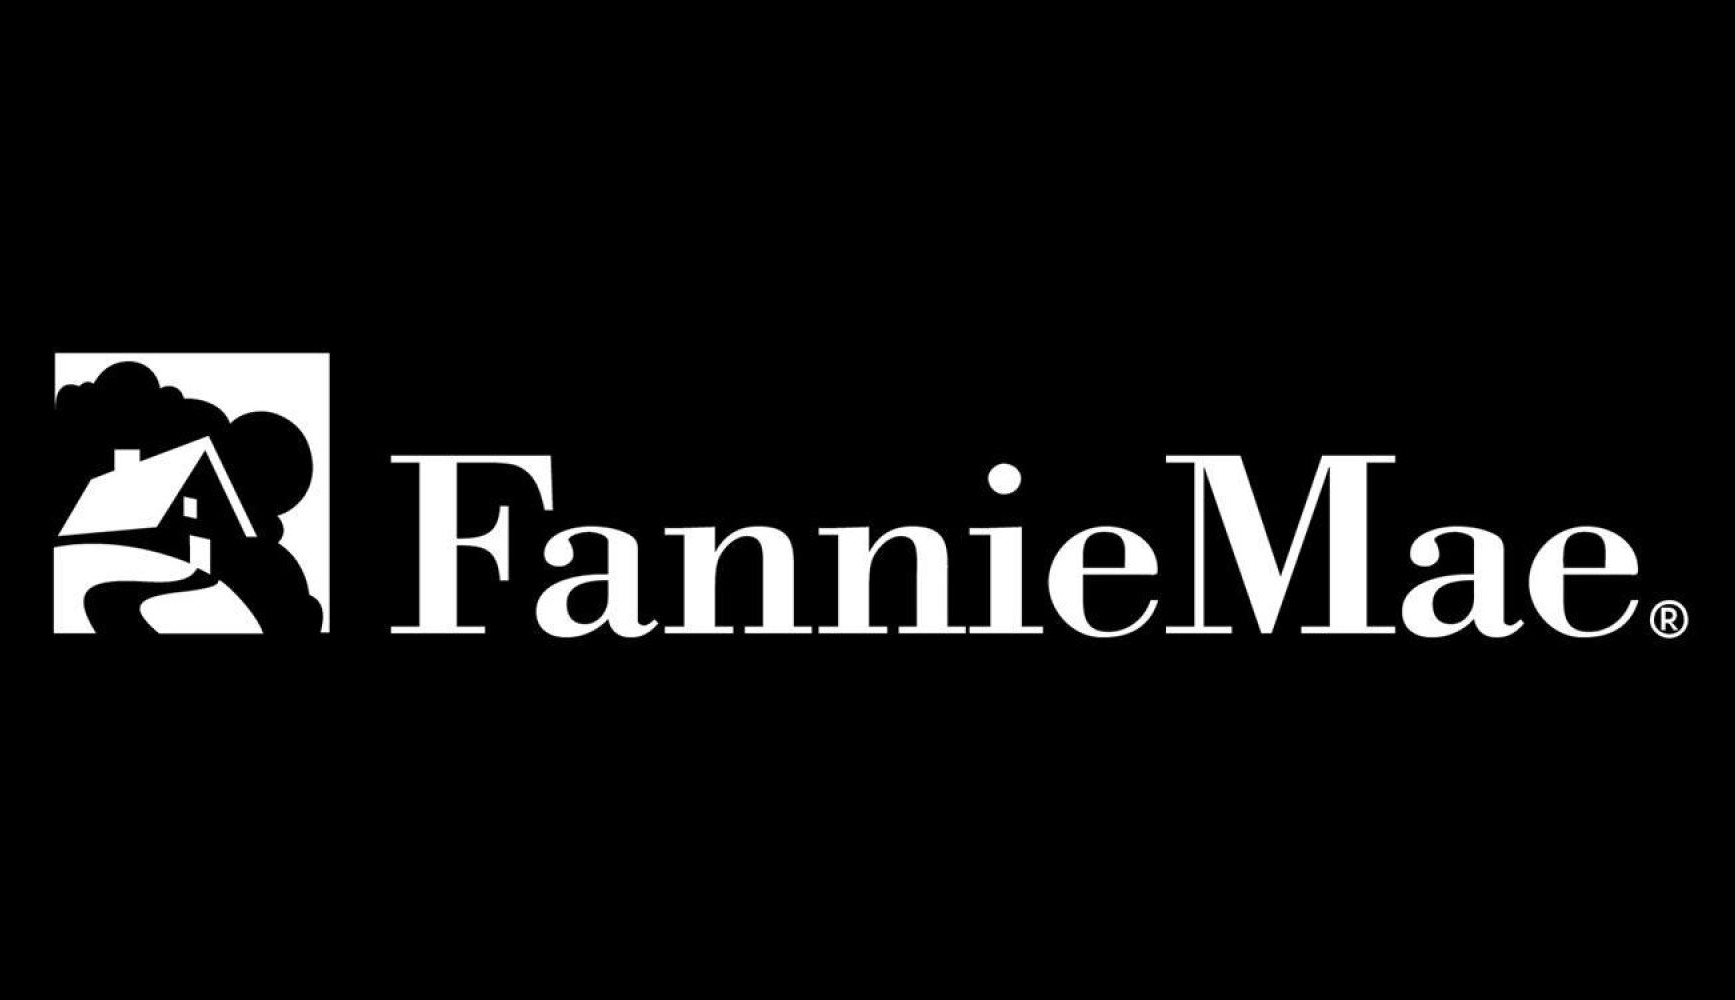 FannieMae